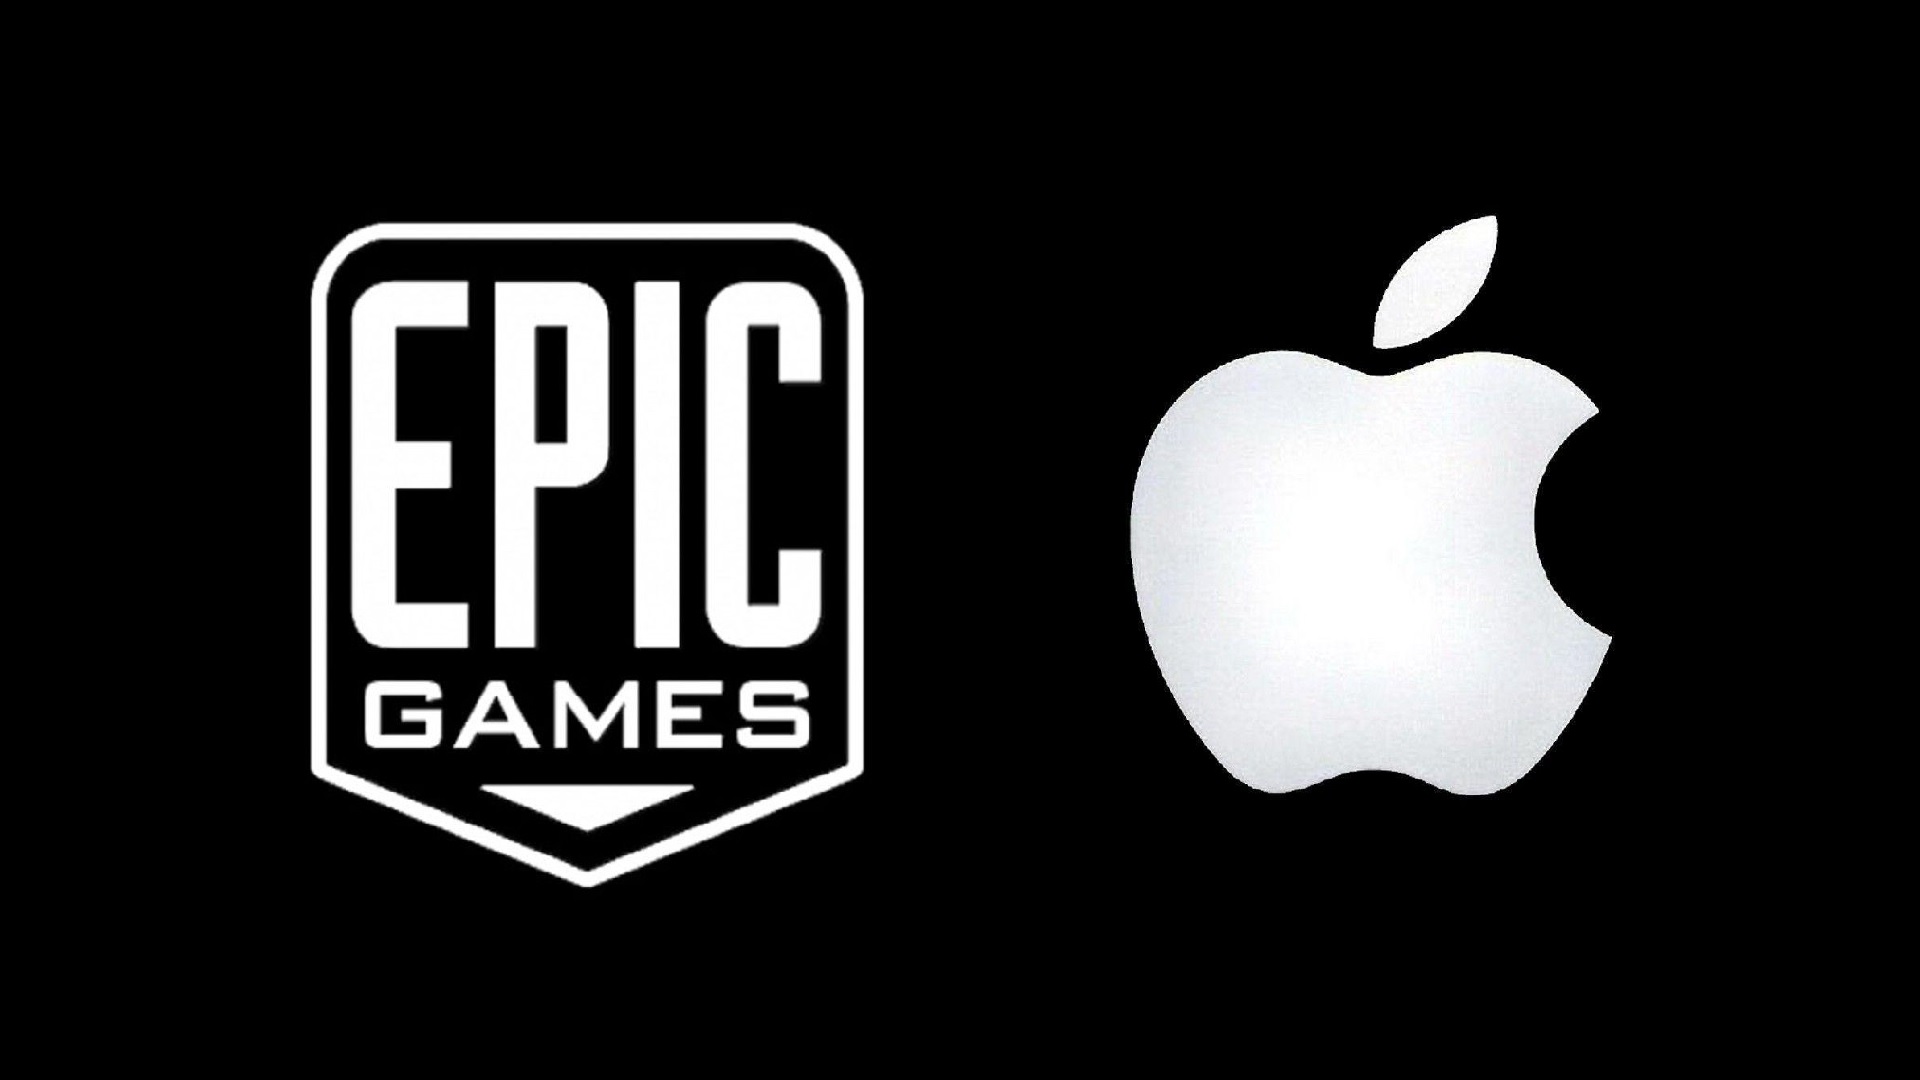 Epische games appel